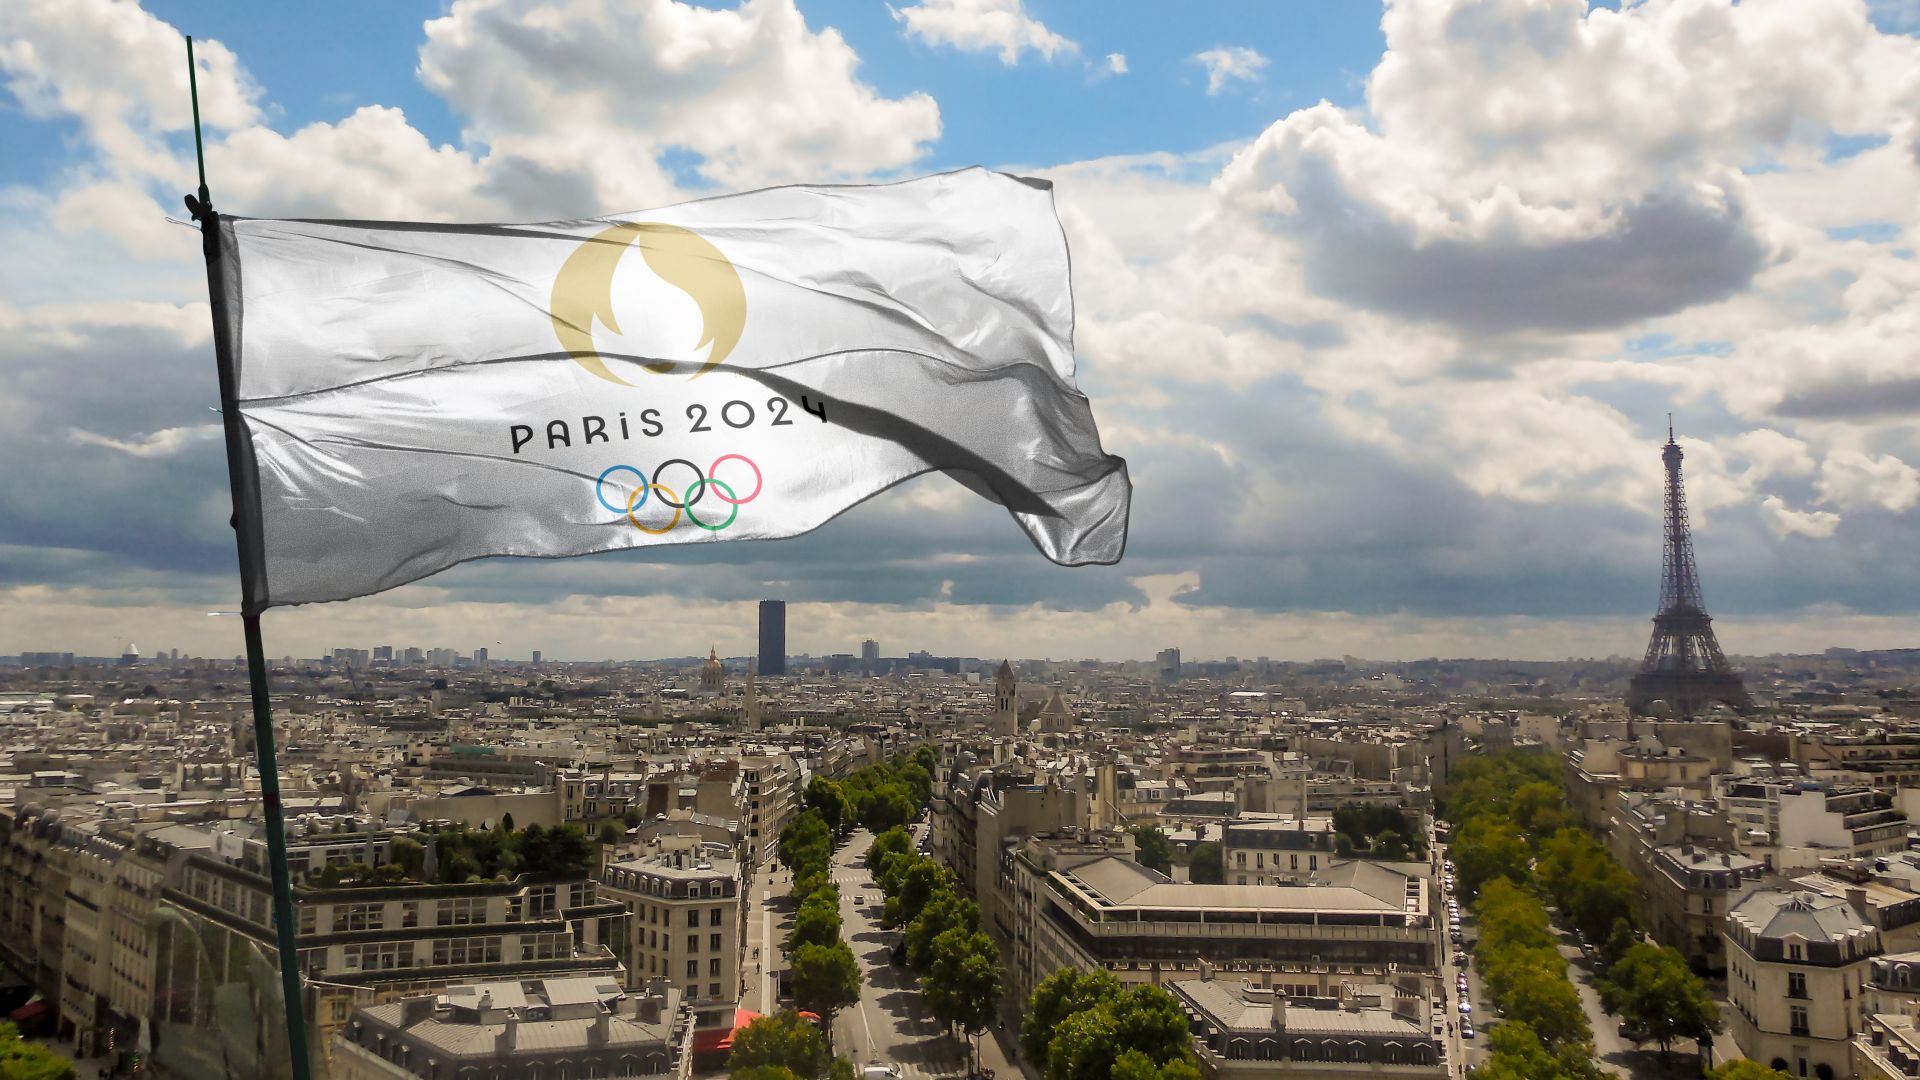 Paris Olympics 2024, Eiffel Tower